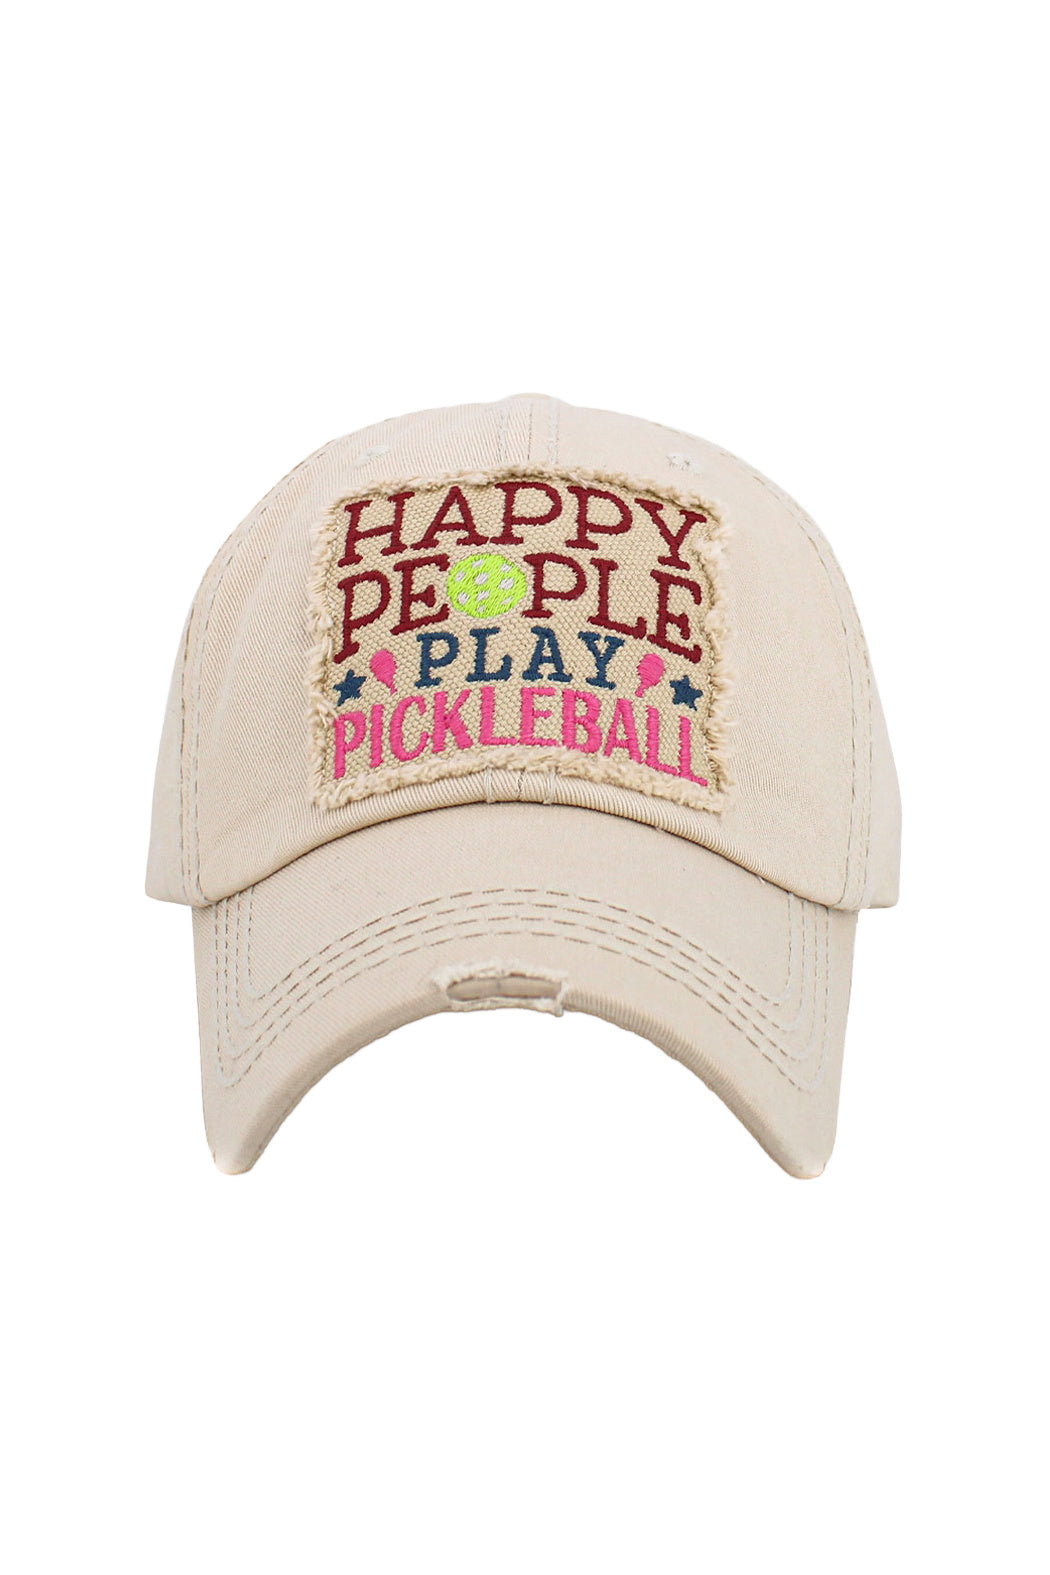 Happy People Play Pickleball Cap